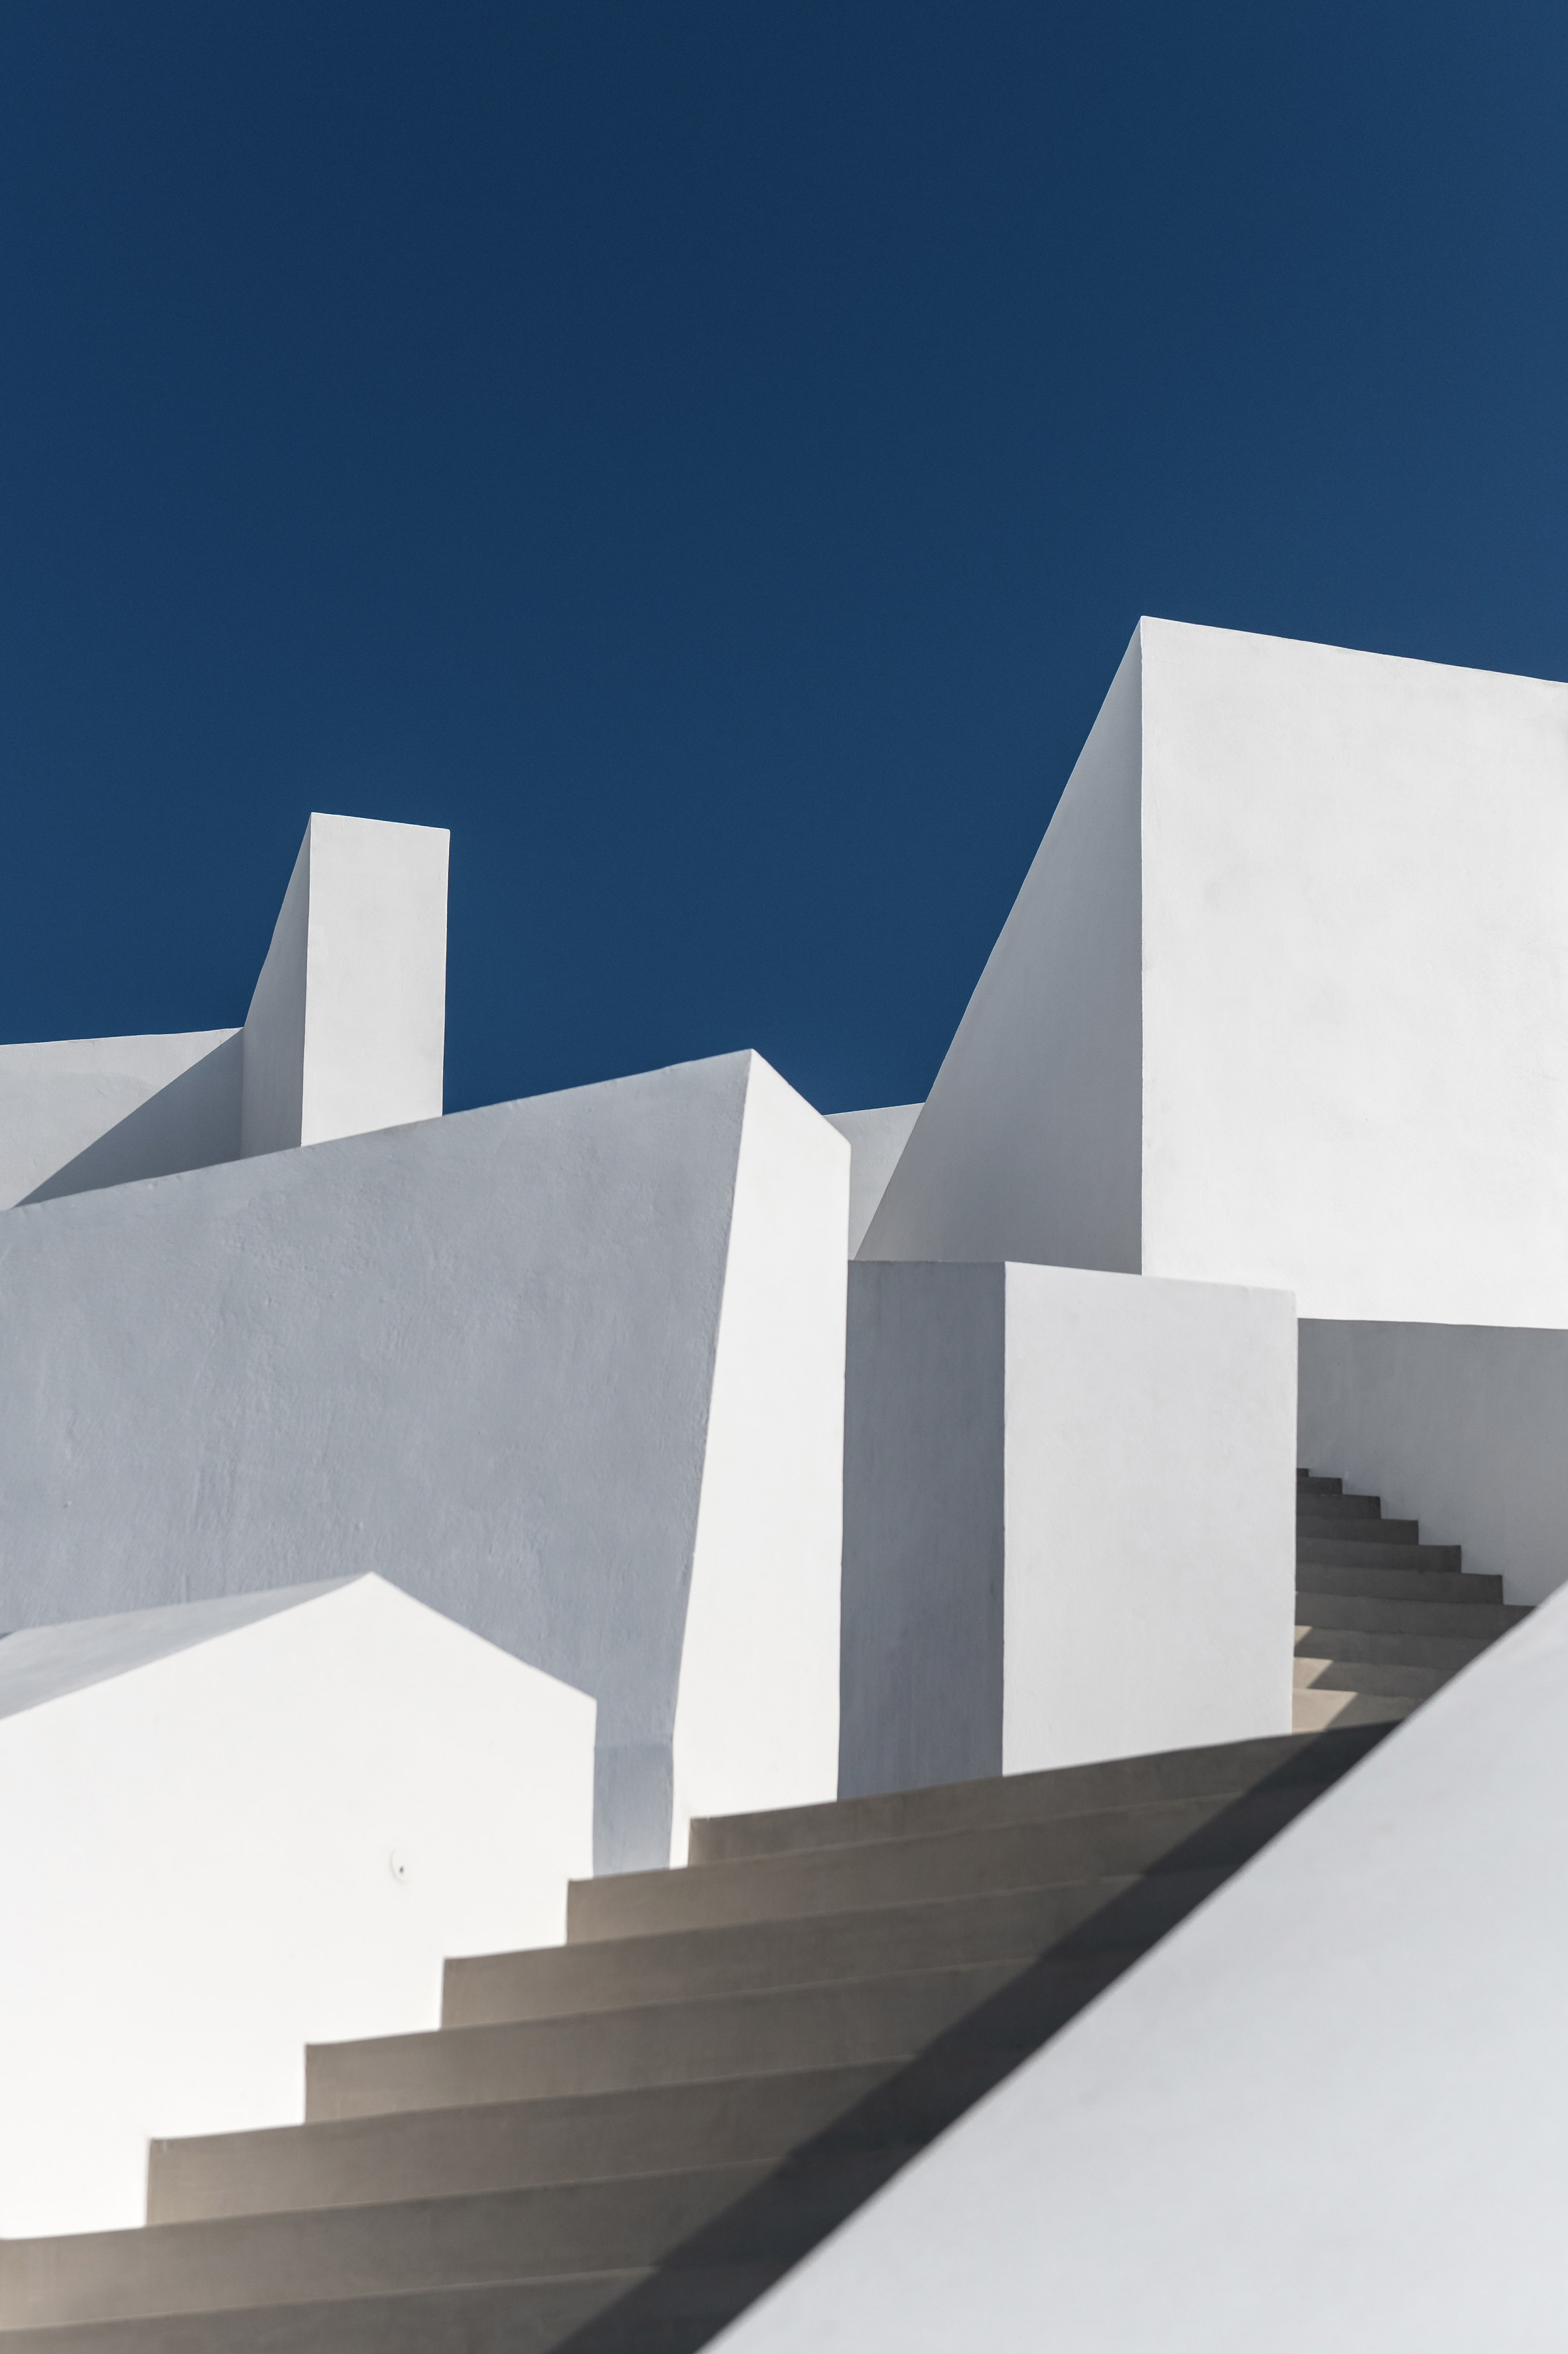 Saint Hotel in Santorini by Kapsimalis Architects